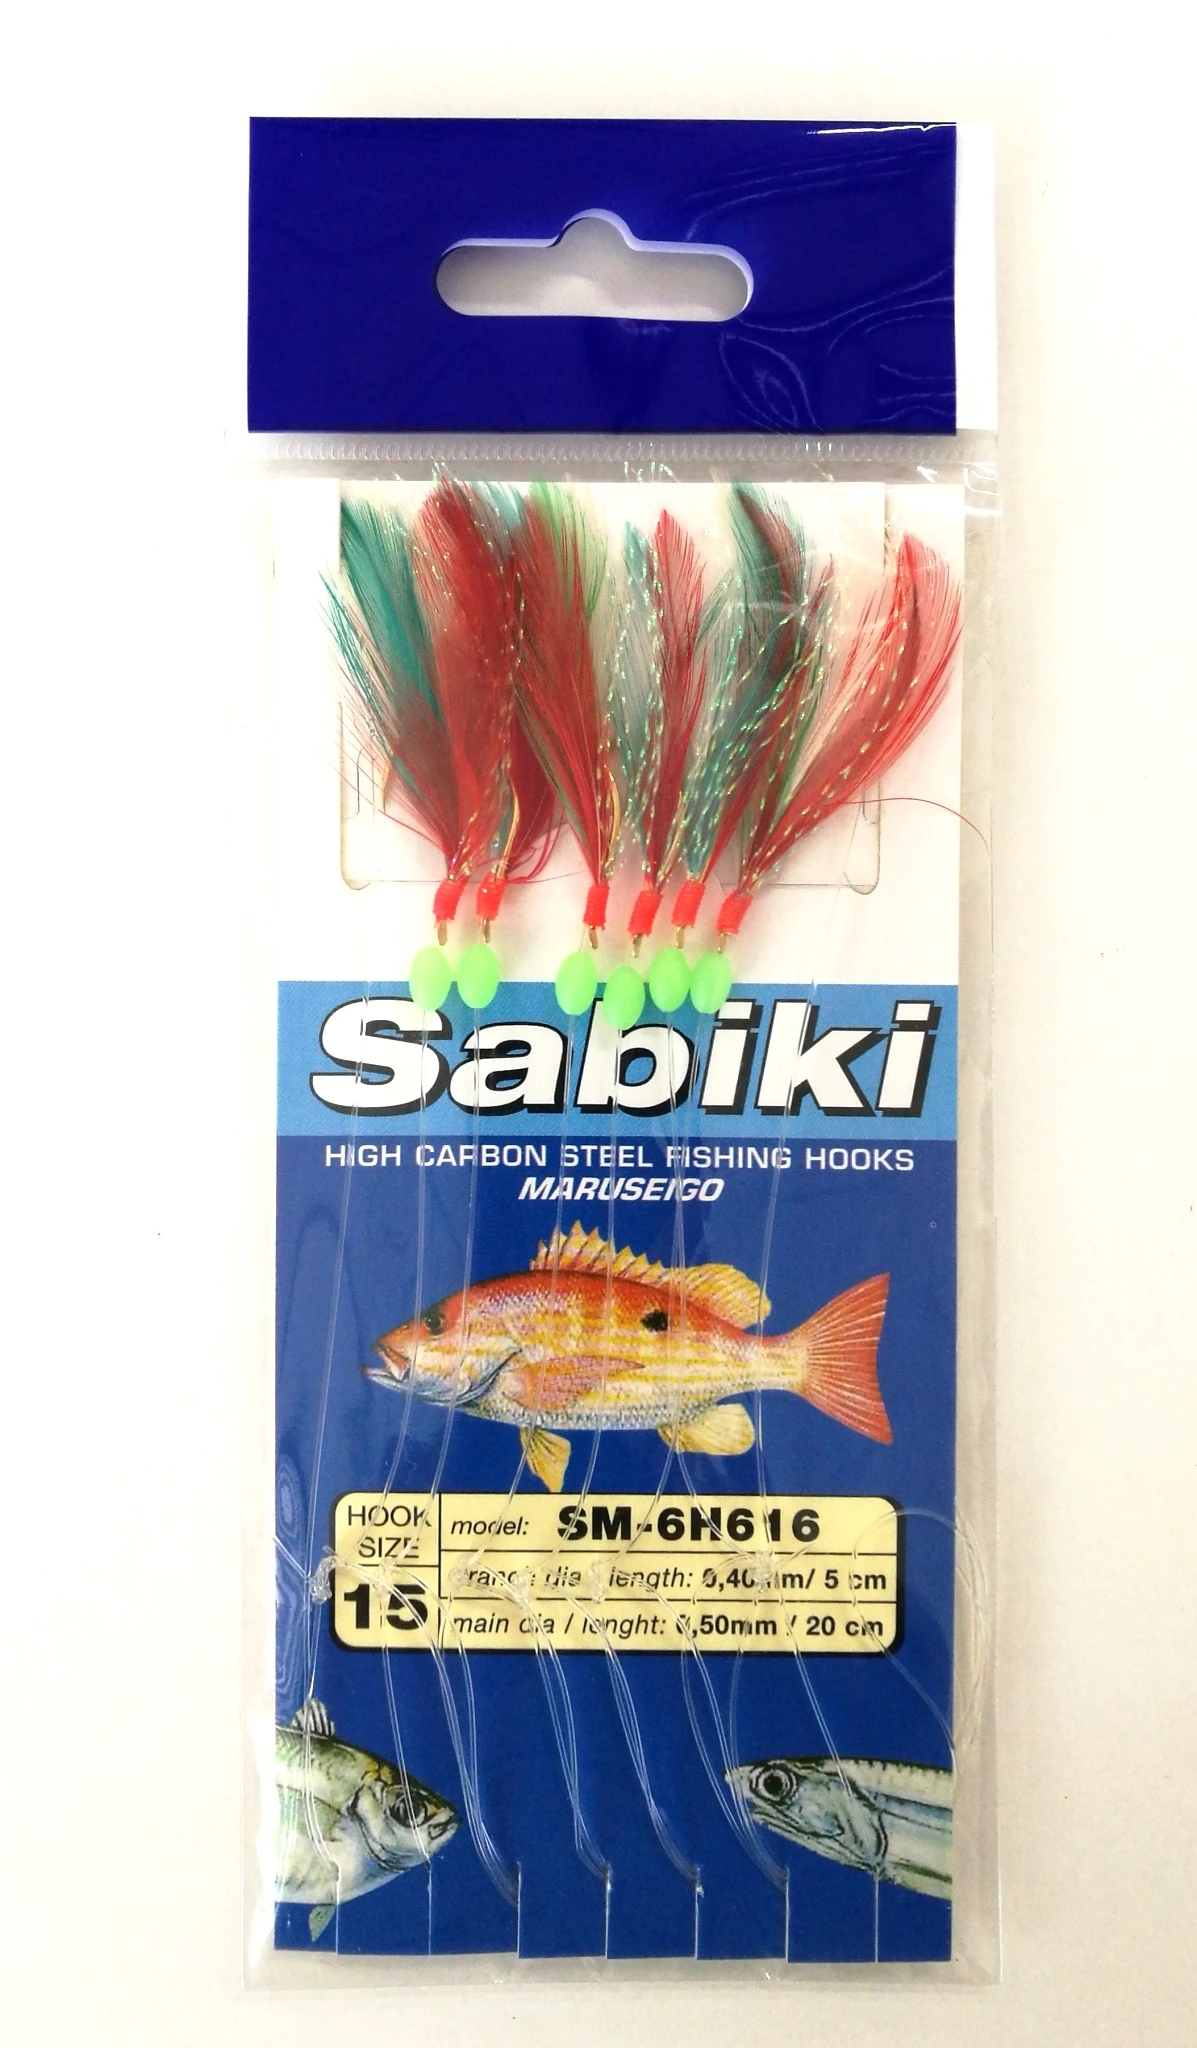 Sabiki Saltwater Fishing Lure Bait Rig Hook Tackle Luminous Beads Feathers SU